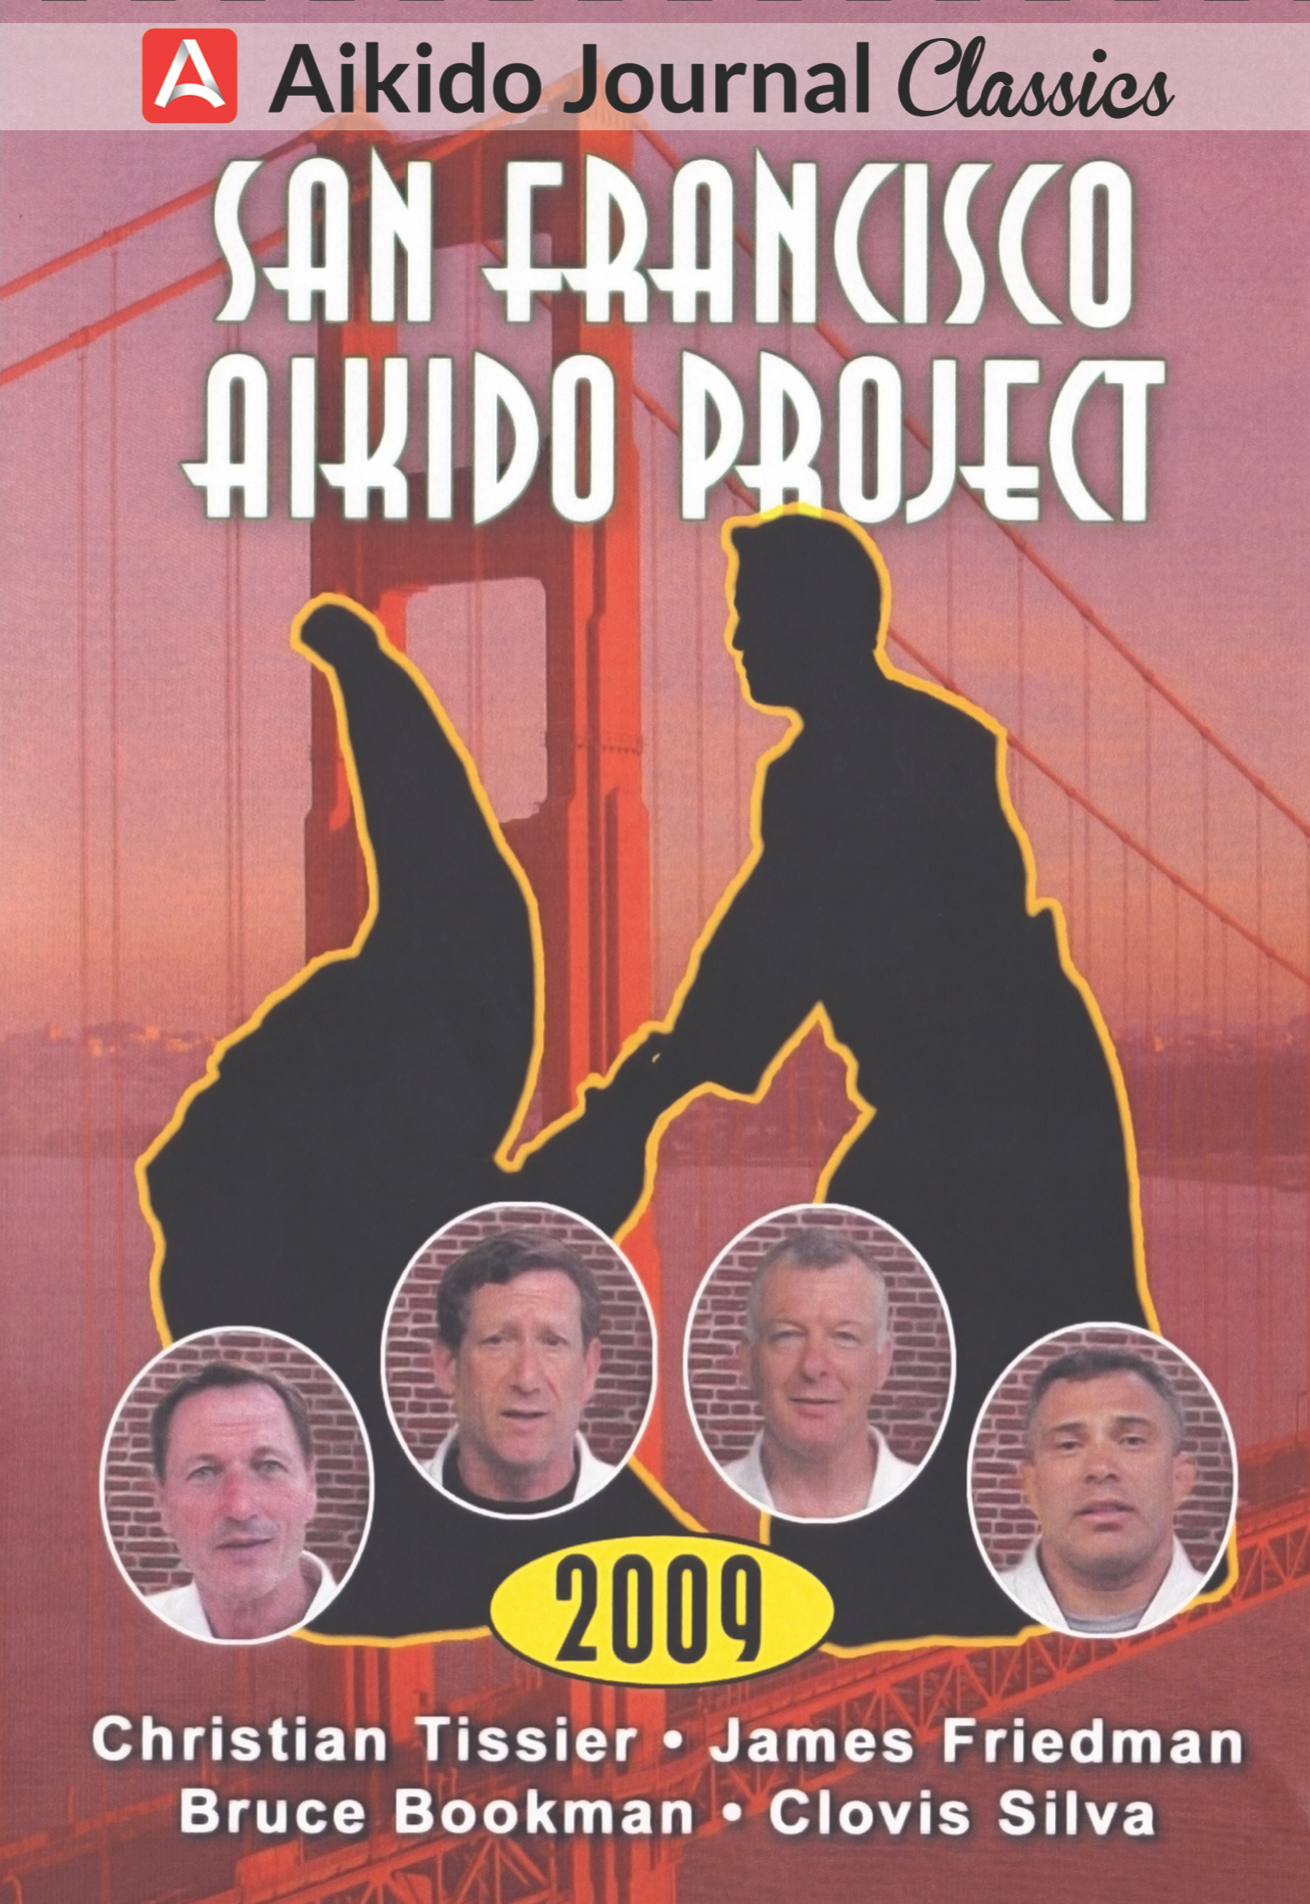 San Francisco Aikido Project DVD